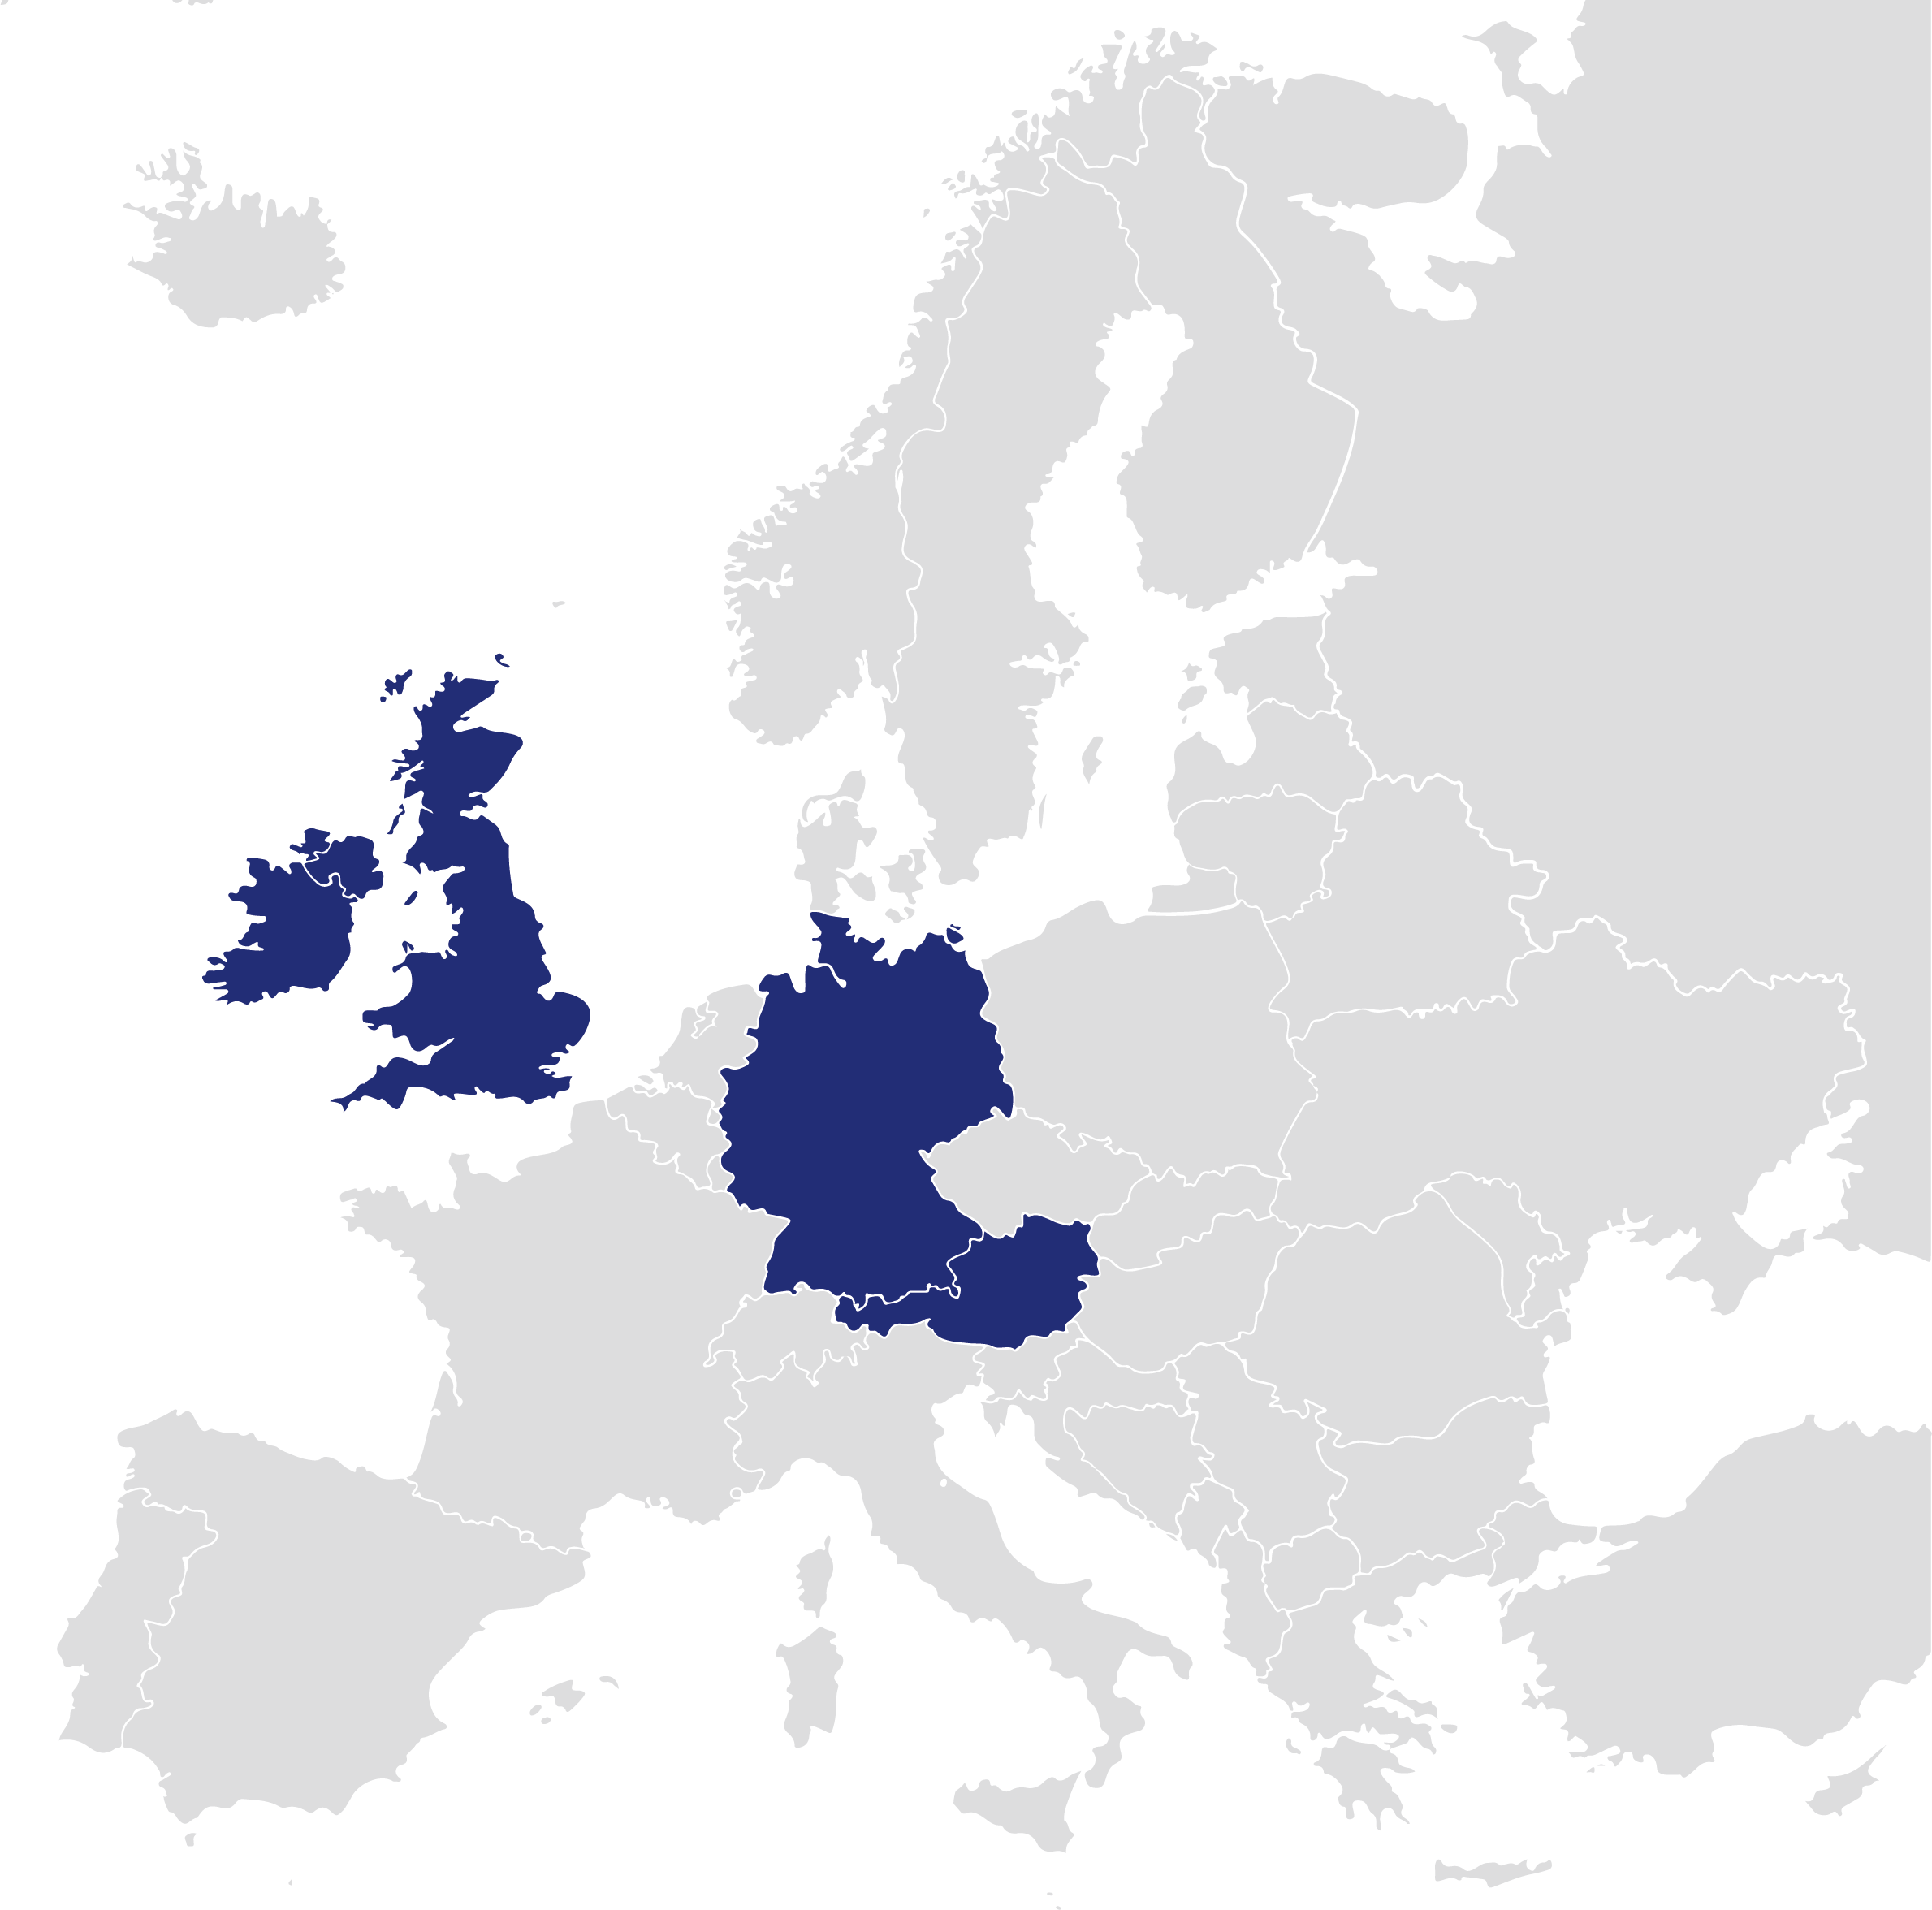 Europa-Map_komplett_blau